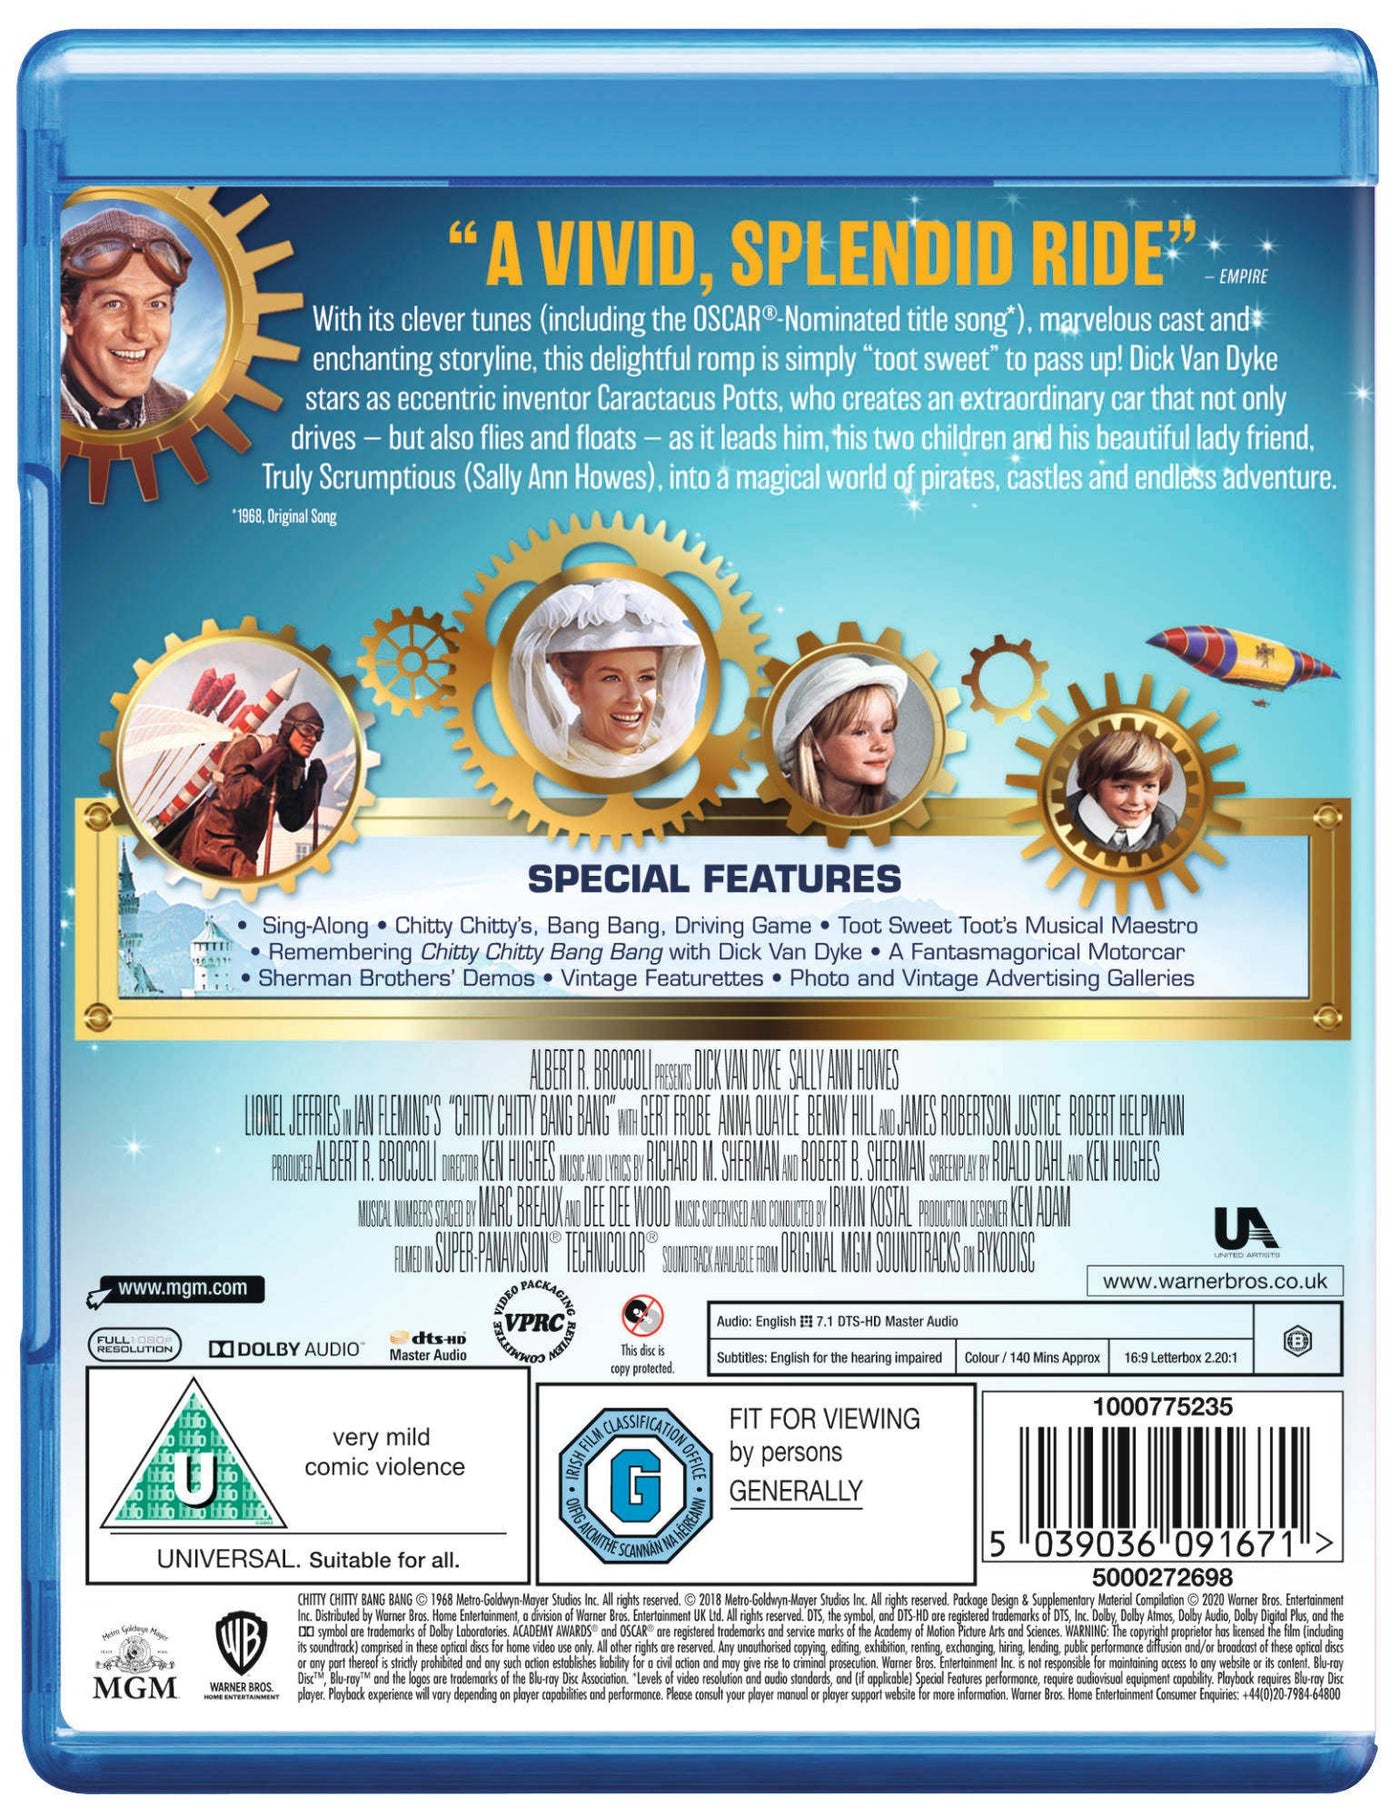 Chitty Chitty Bang Bang 50th Anniversary Re-Sleeve (Blu-ray)